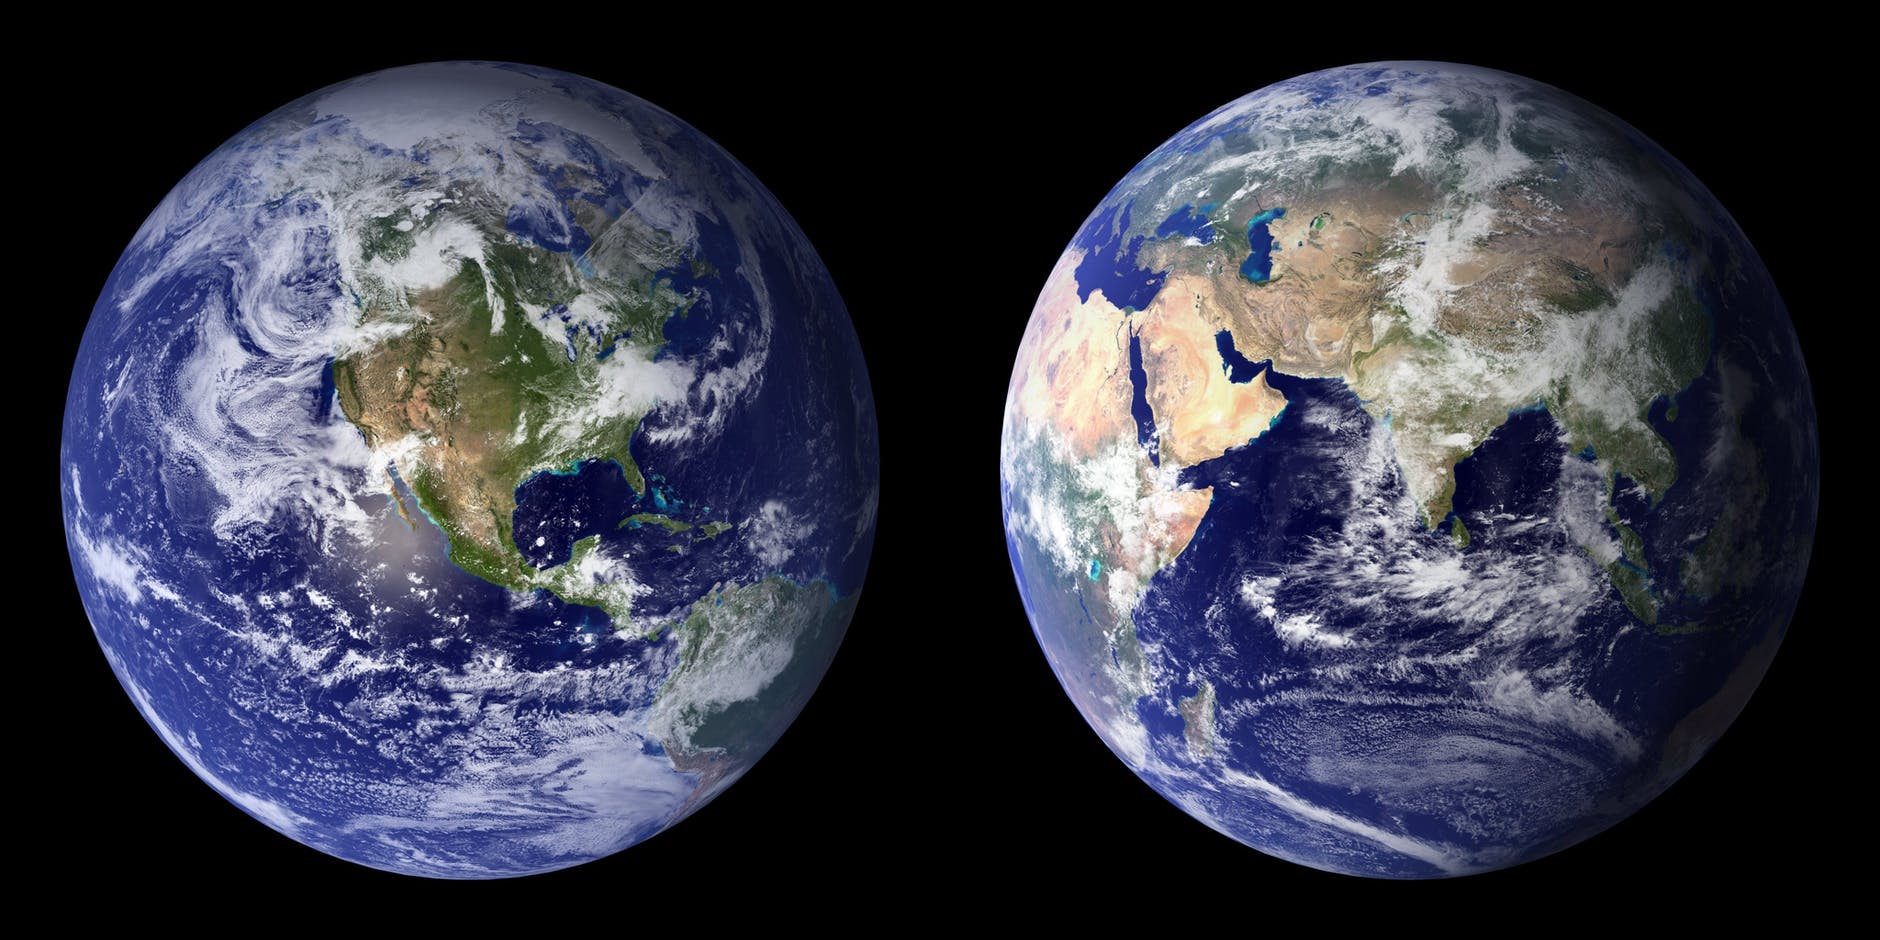 earth-planet-front-side-back-41950.jpeg